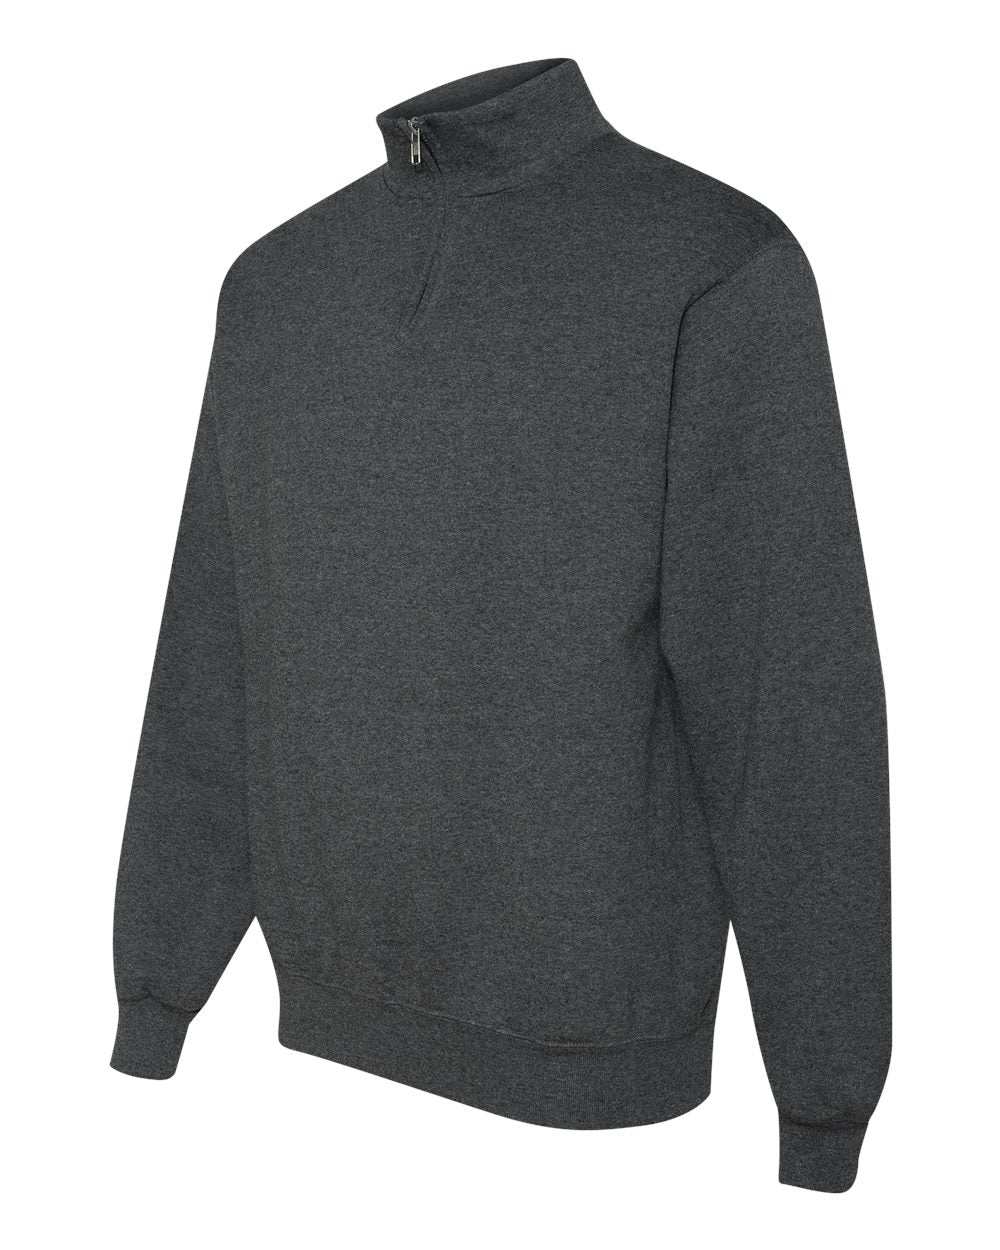 Personalized Embroidered Cadet Collar Quarter-Zip Sweatshirt